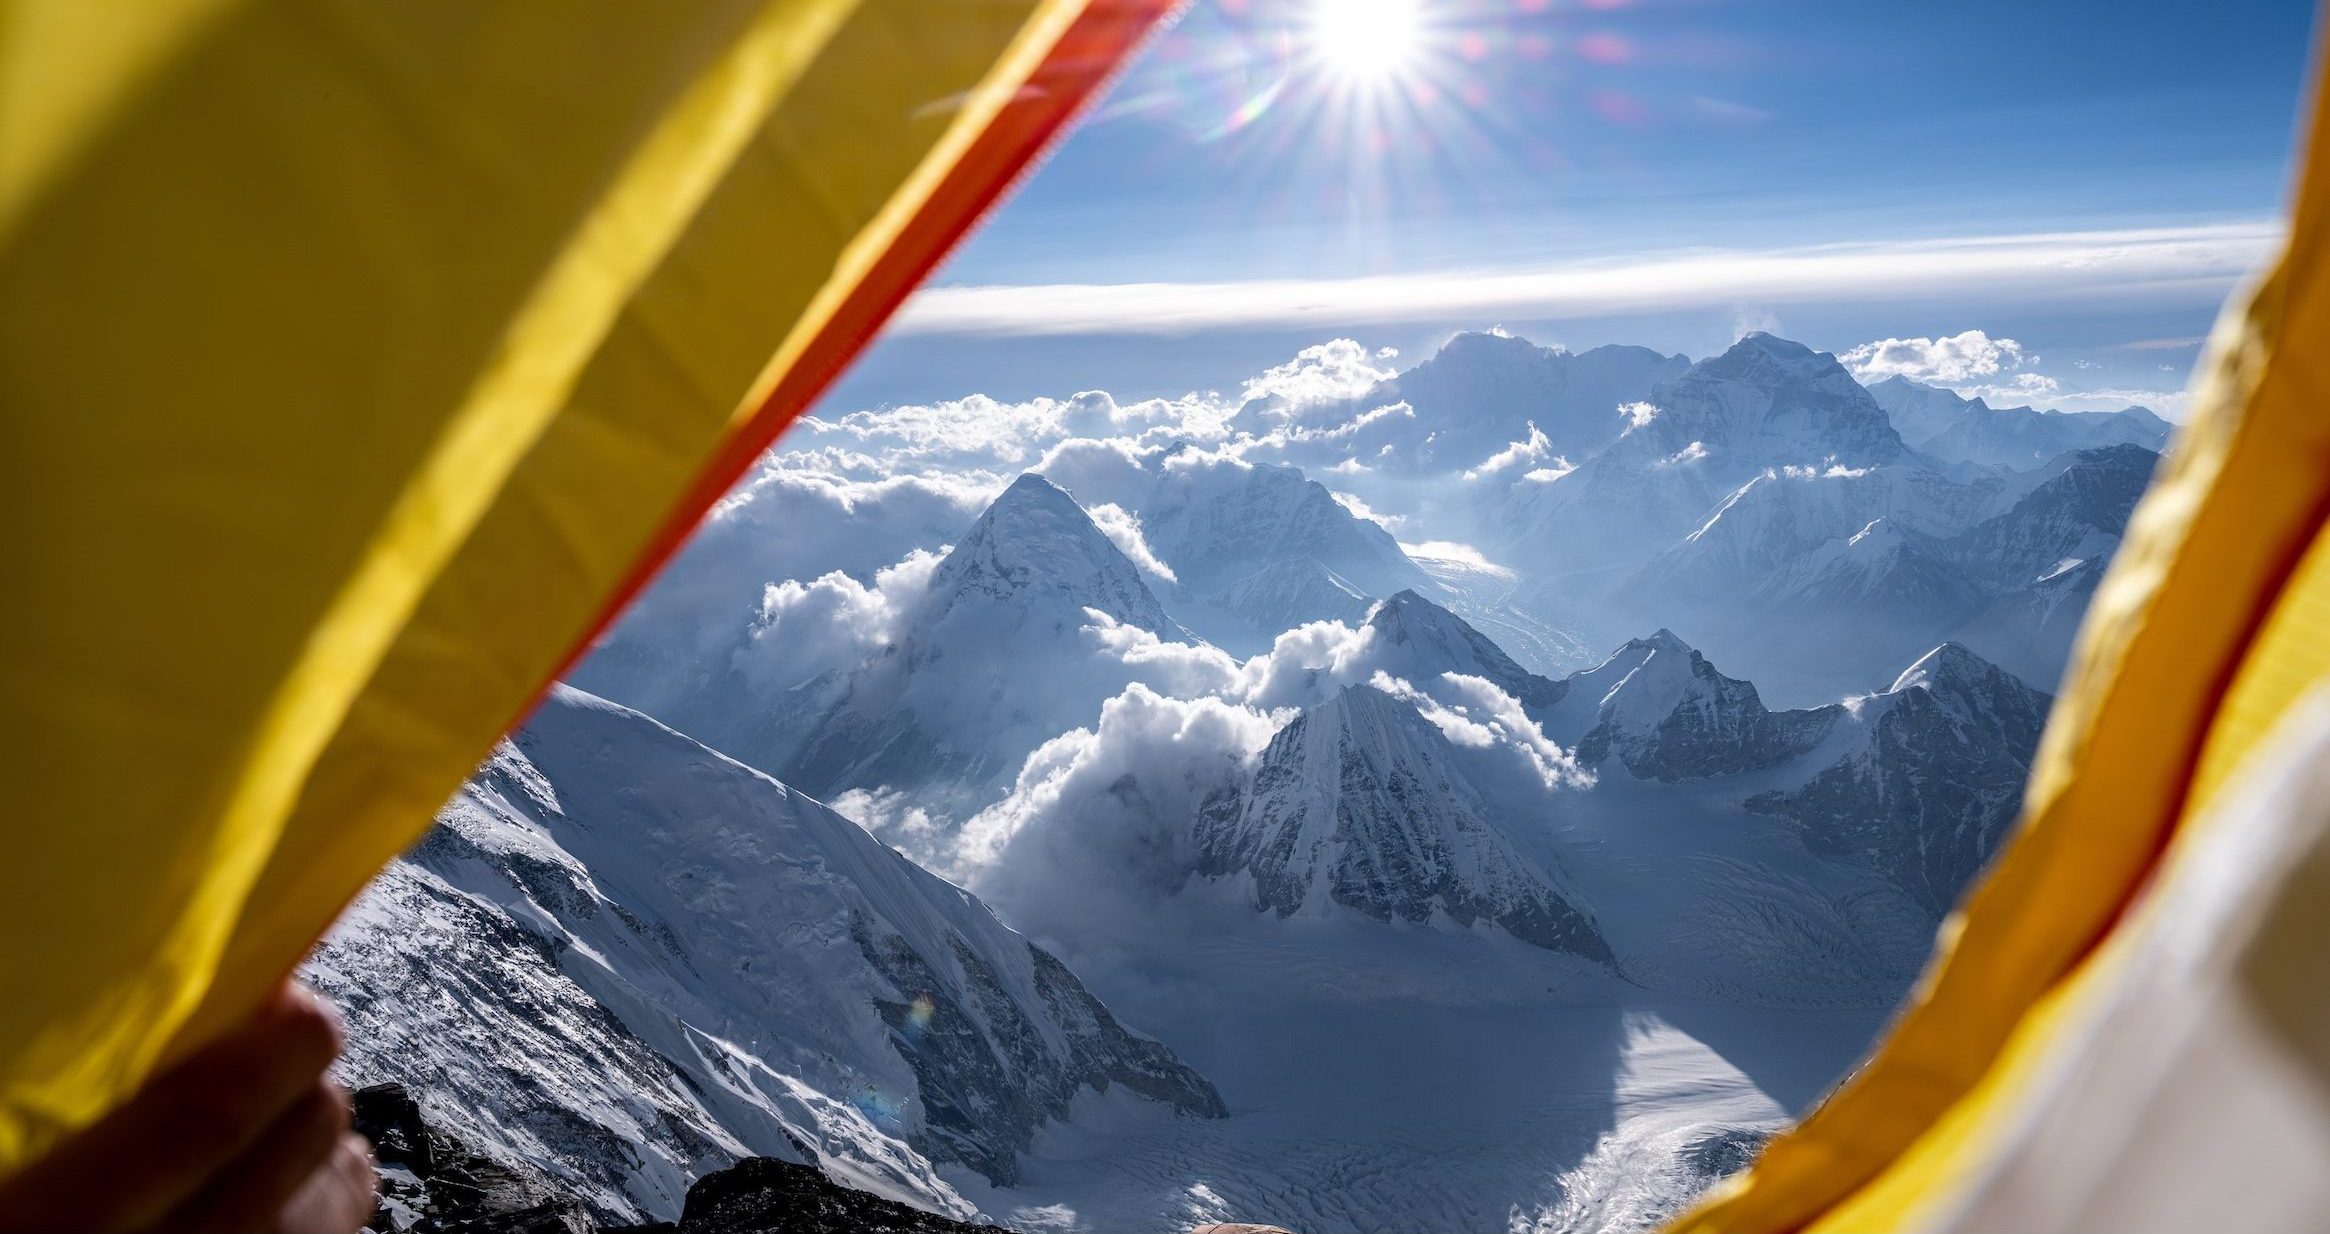 Mount Everest North Flash™ Expedition Furtenbach Adventures